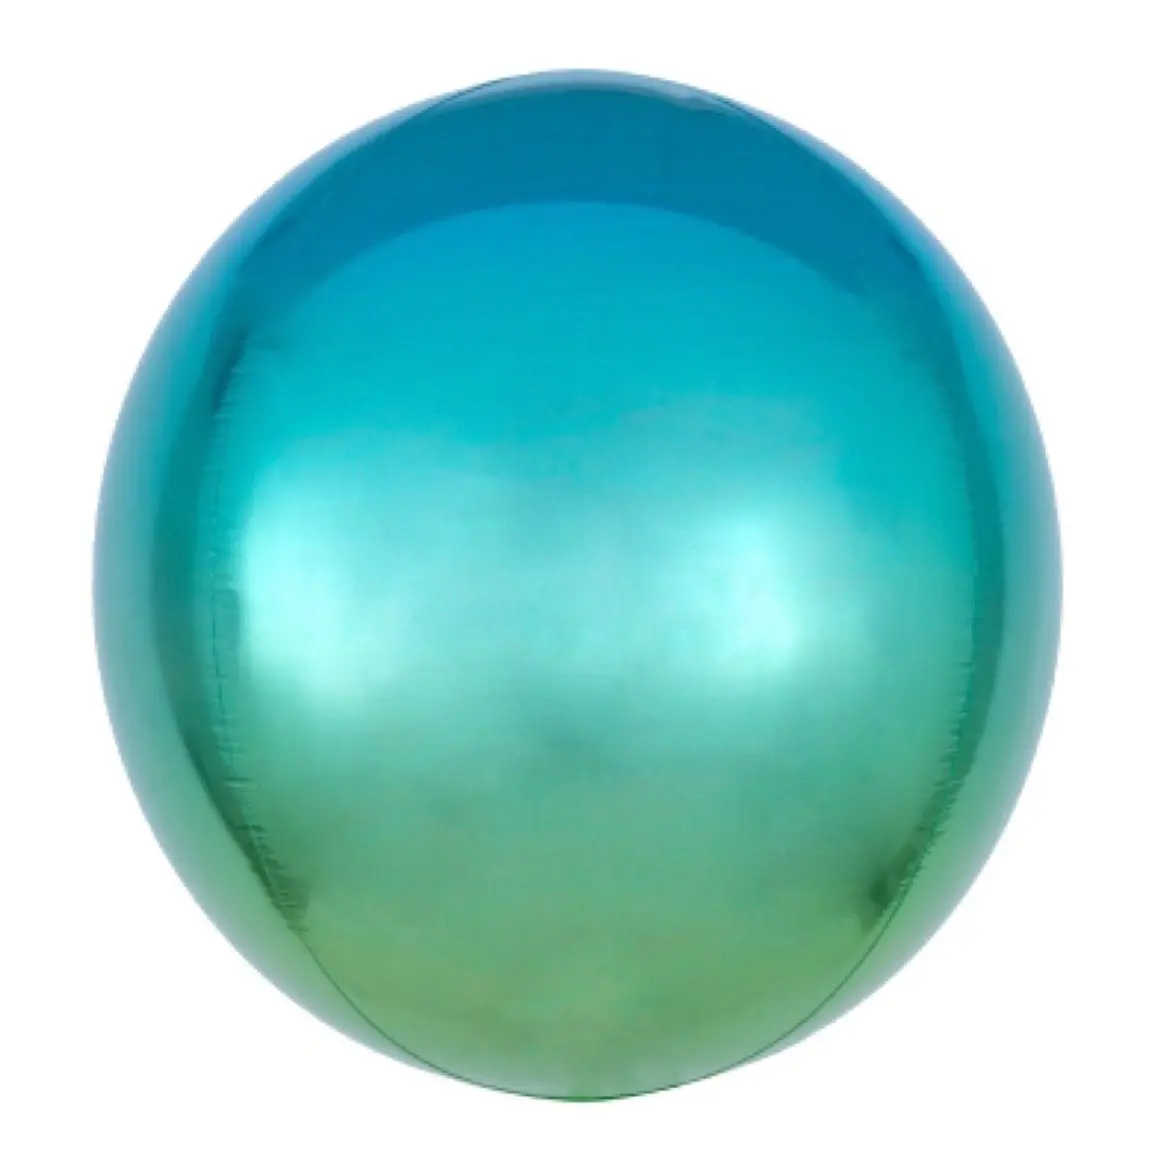 ORBZ sphere balloon - Blue Green